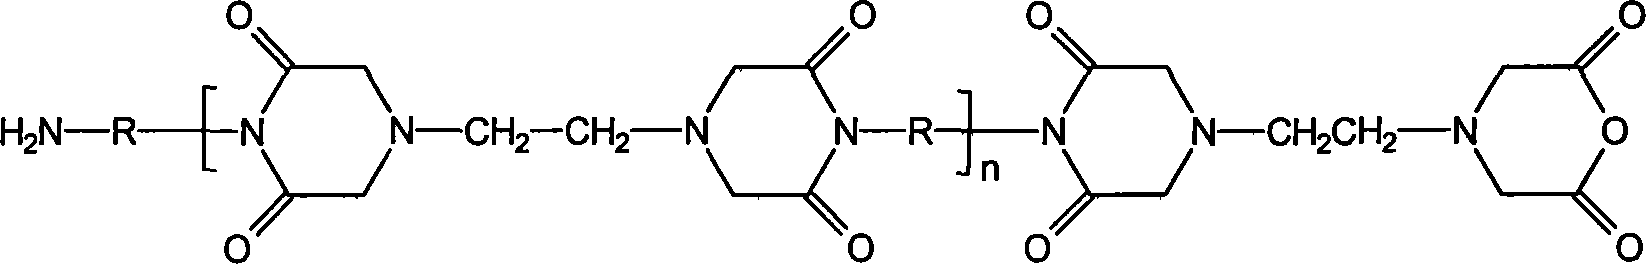 Hydrogel materials based on ethylenediaminetetraacetic dianhydride